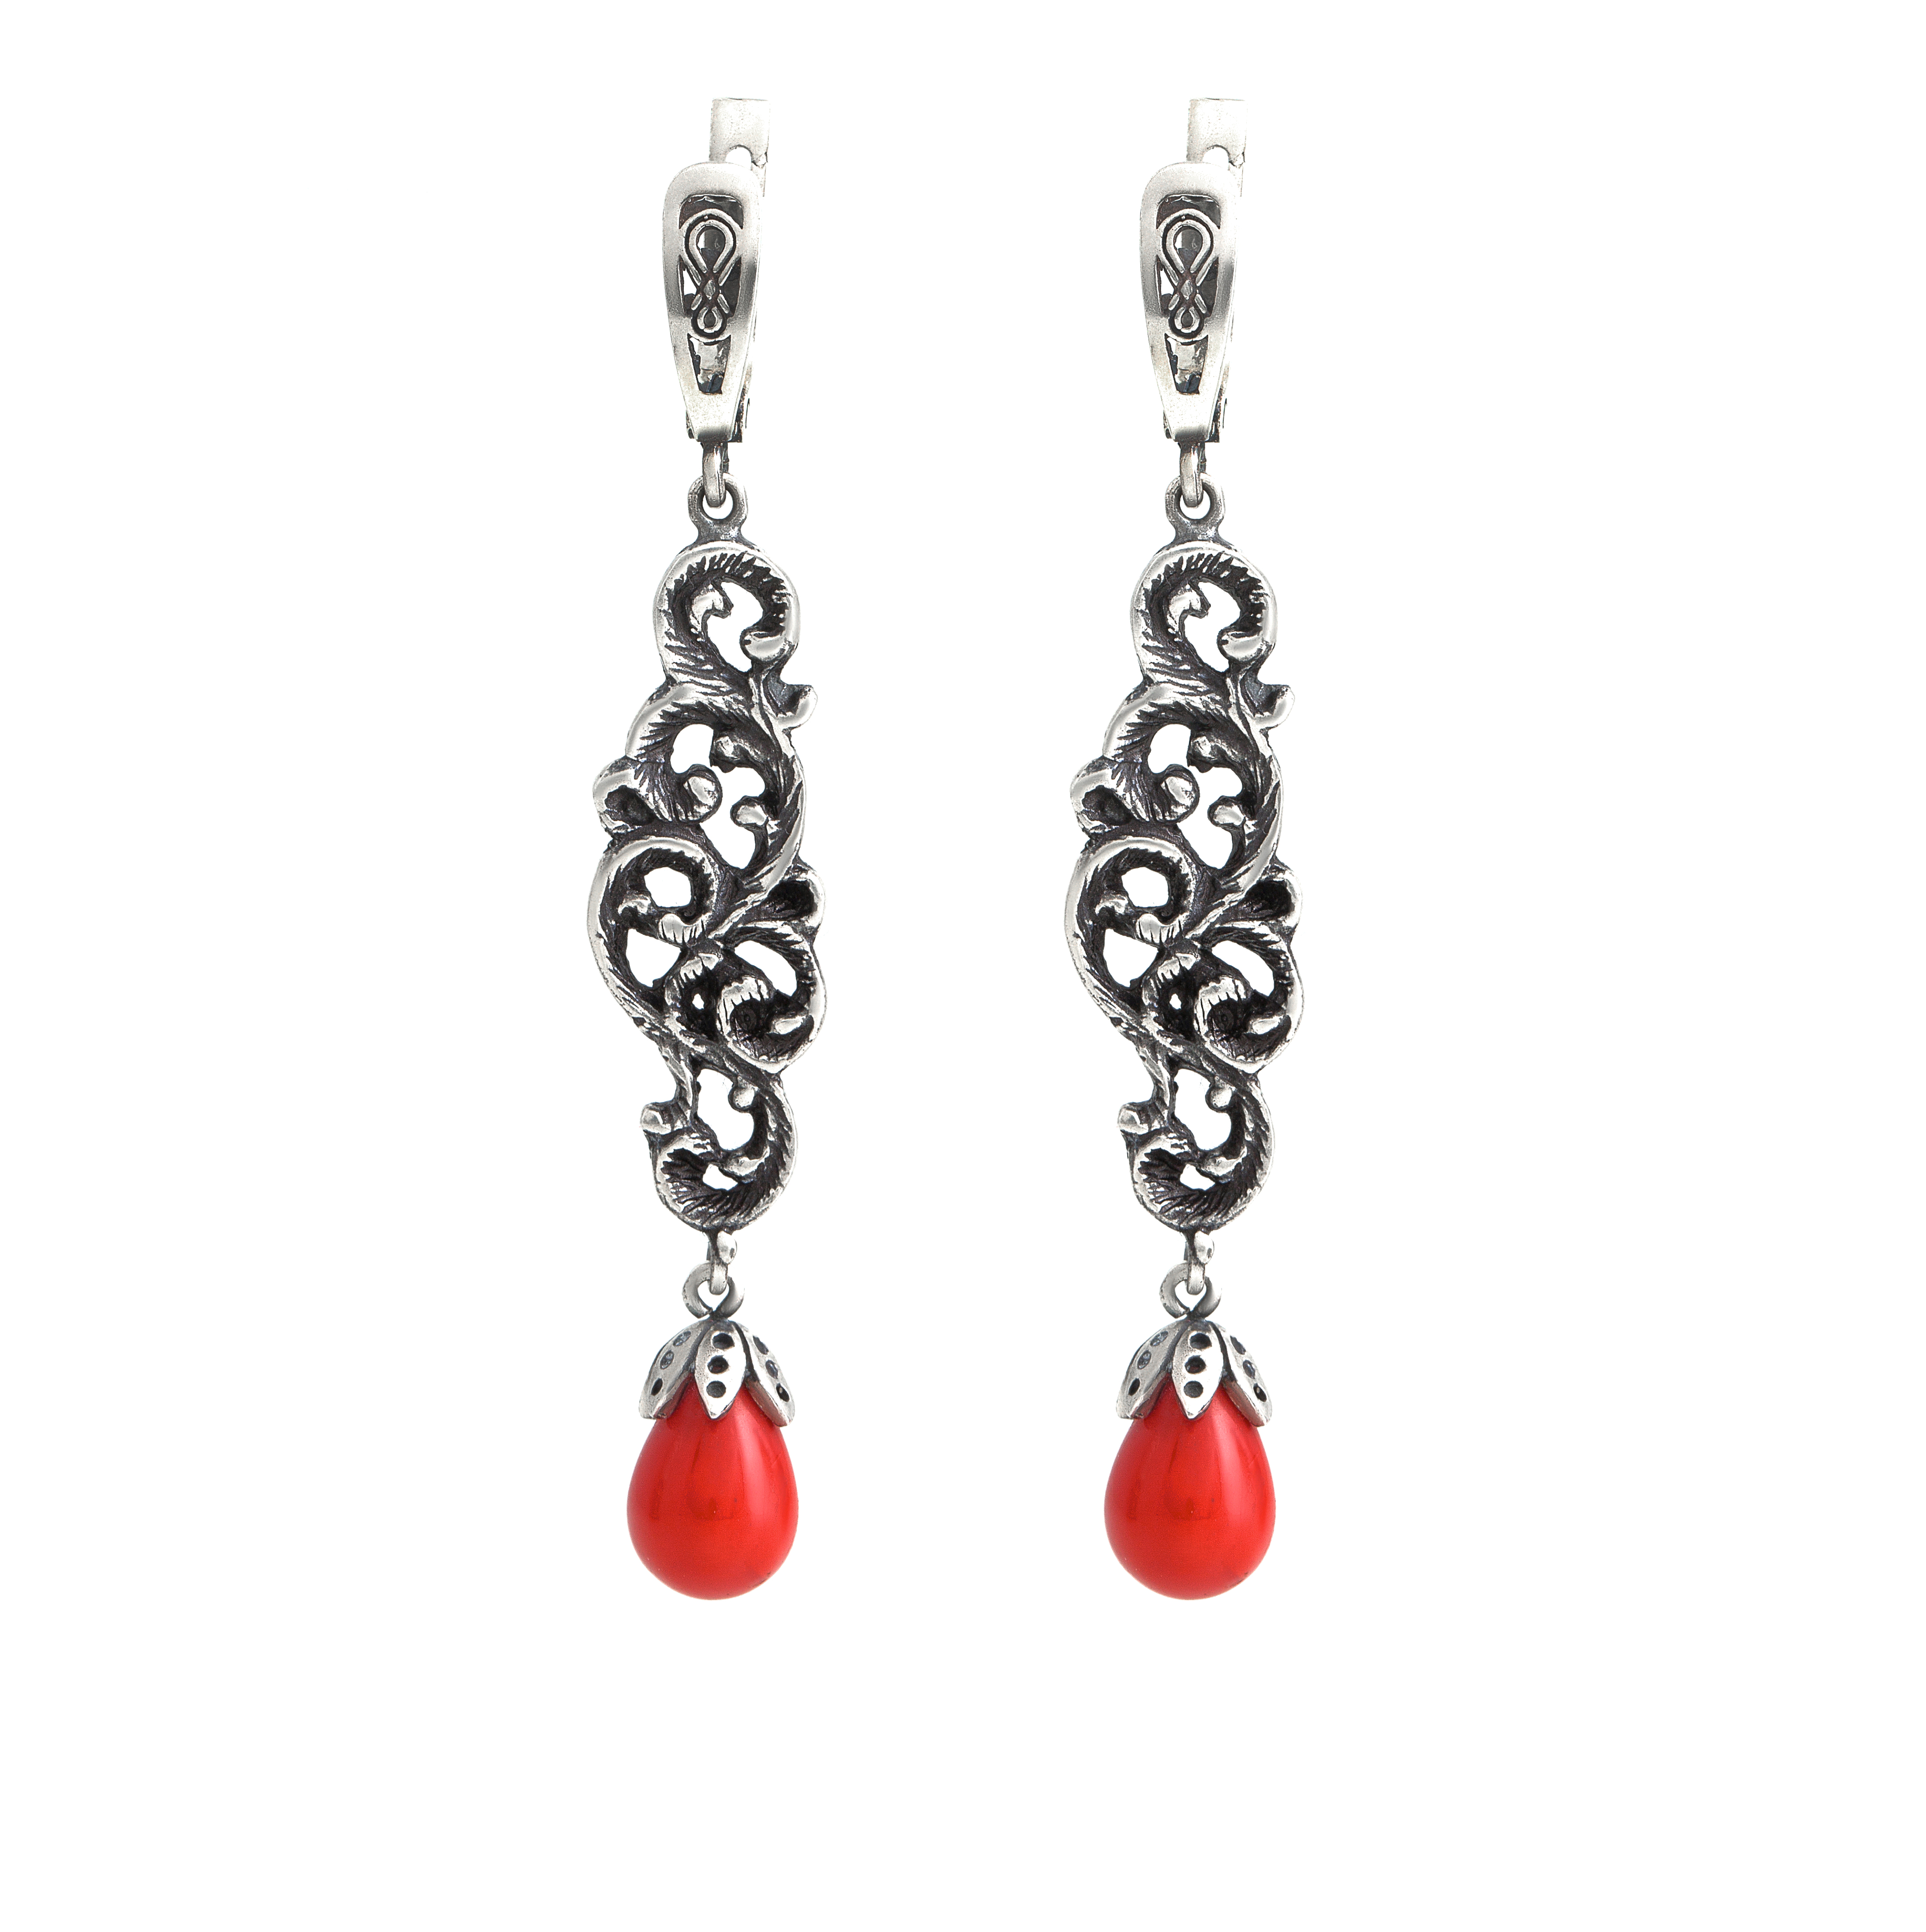 607-earrings-with-red-coral-by-koriz-2.jpg